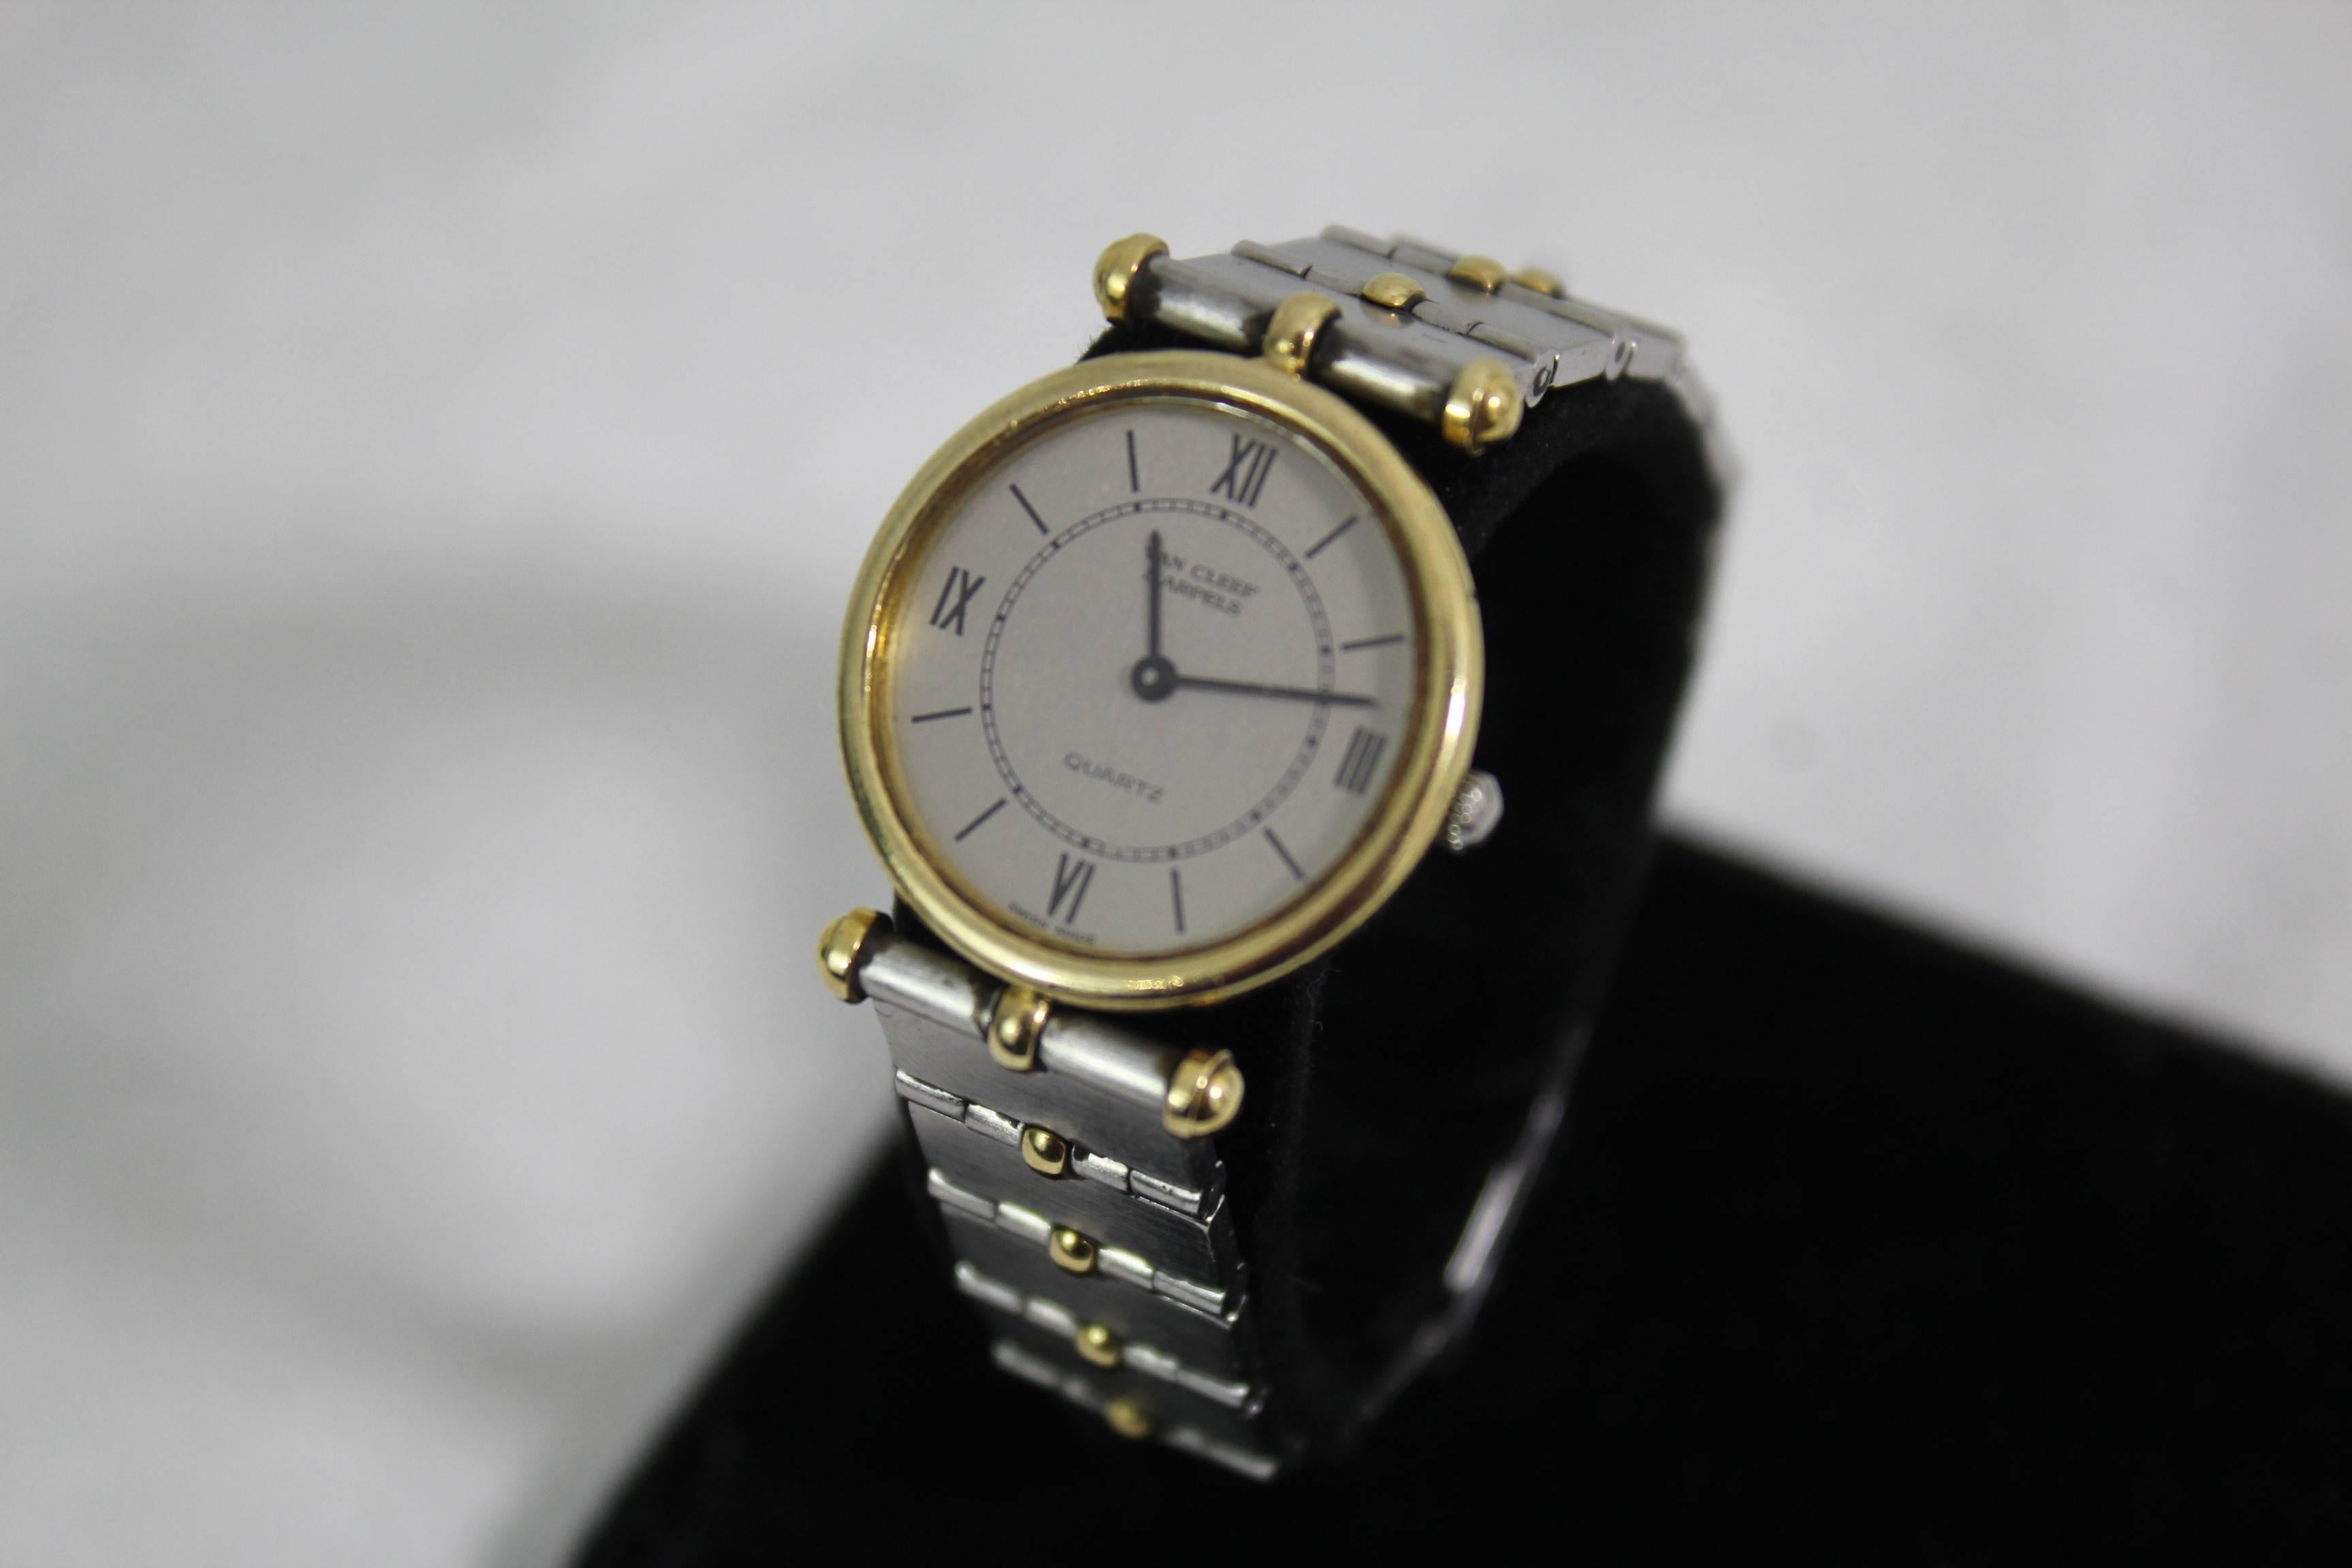 Nice Vintage Van Cleef and Arpels Quartz Watch.
Quartz mouvement in good working condition.
Smaall wrist size 15 cm. Case 2.2 cm